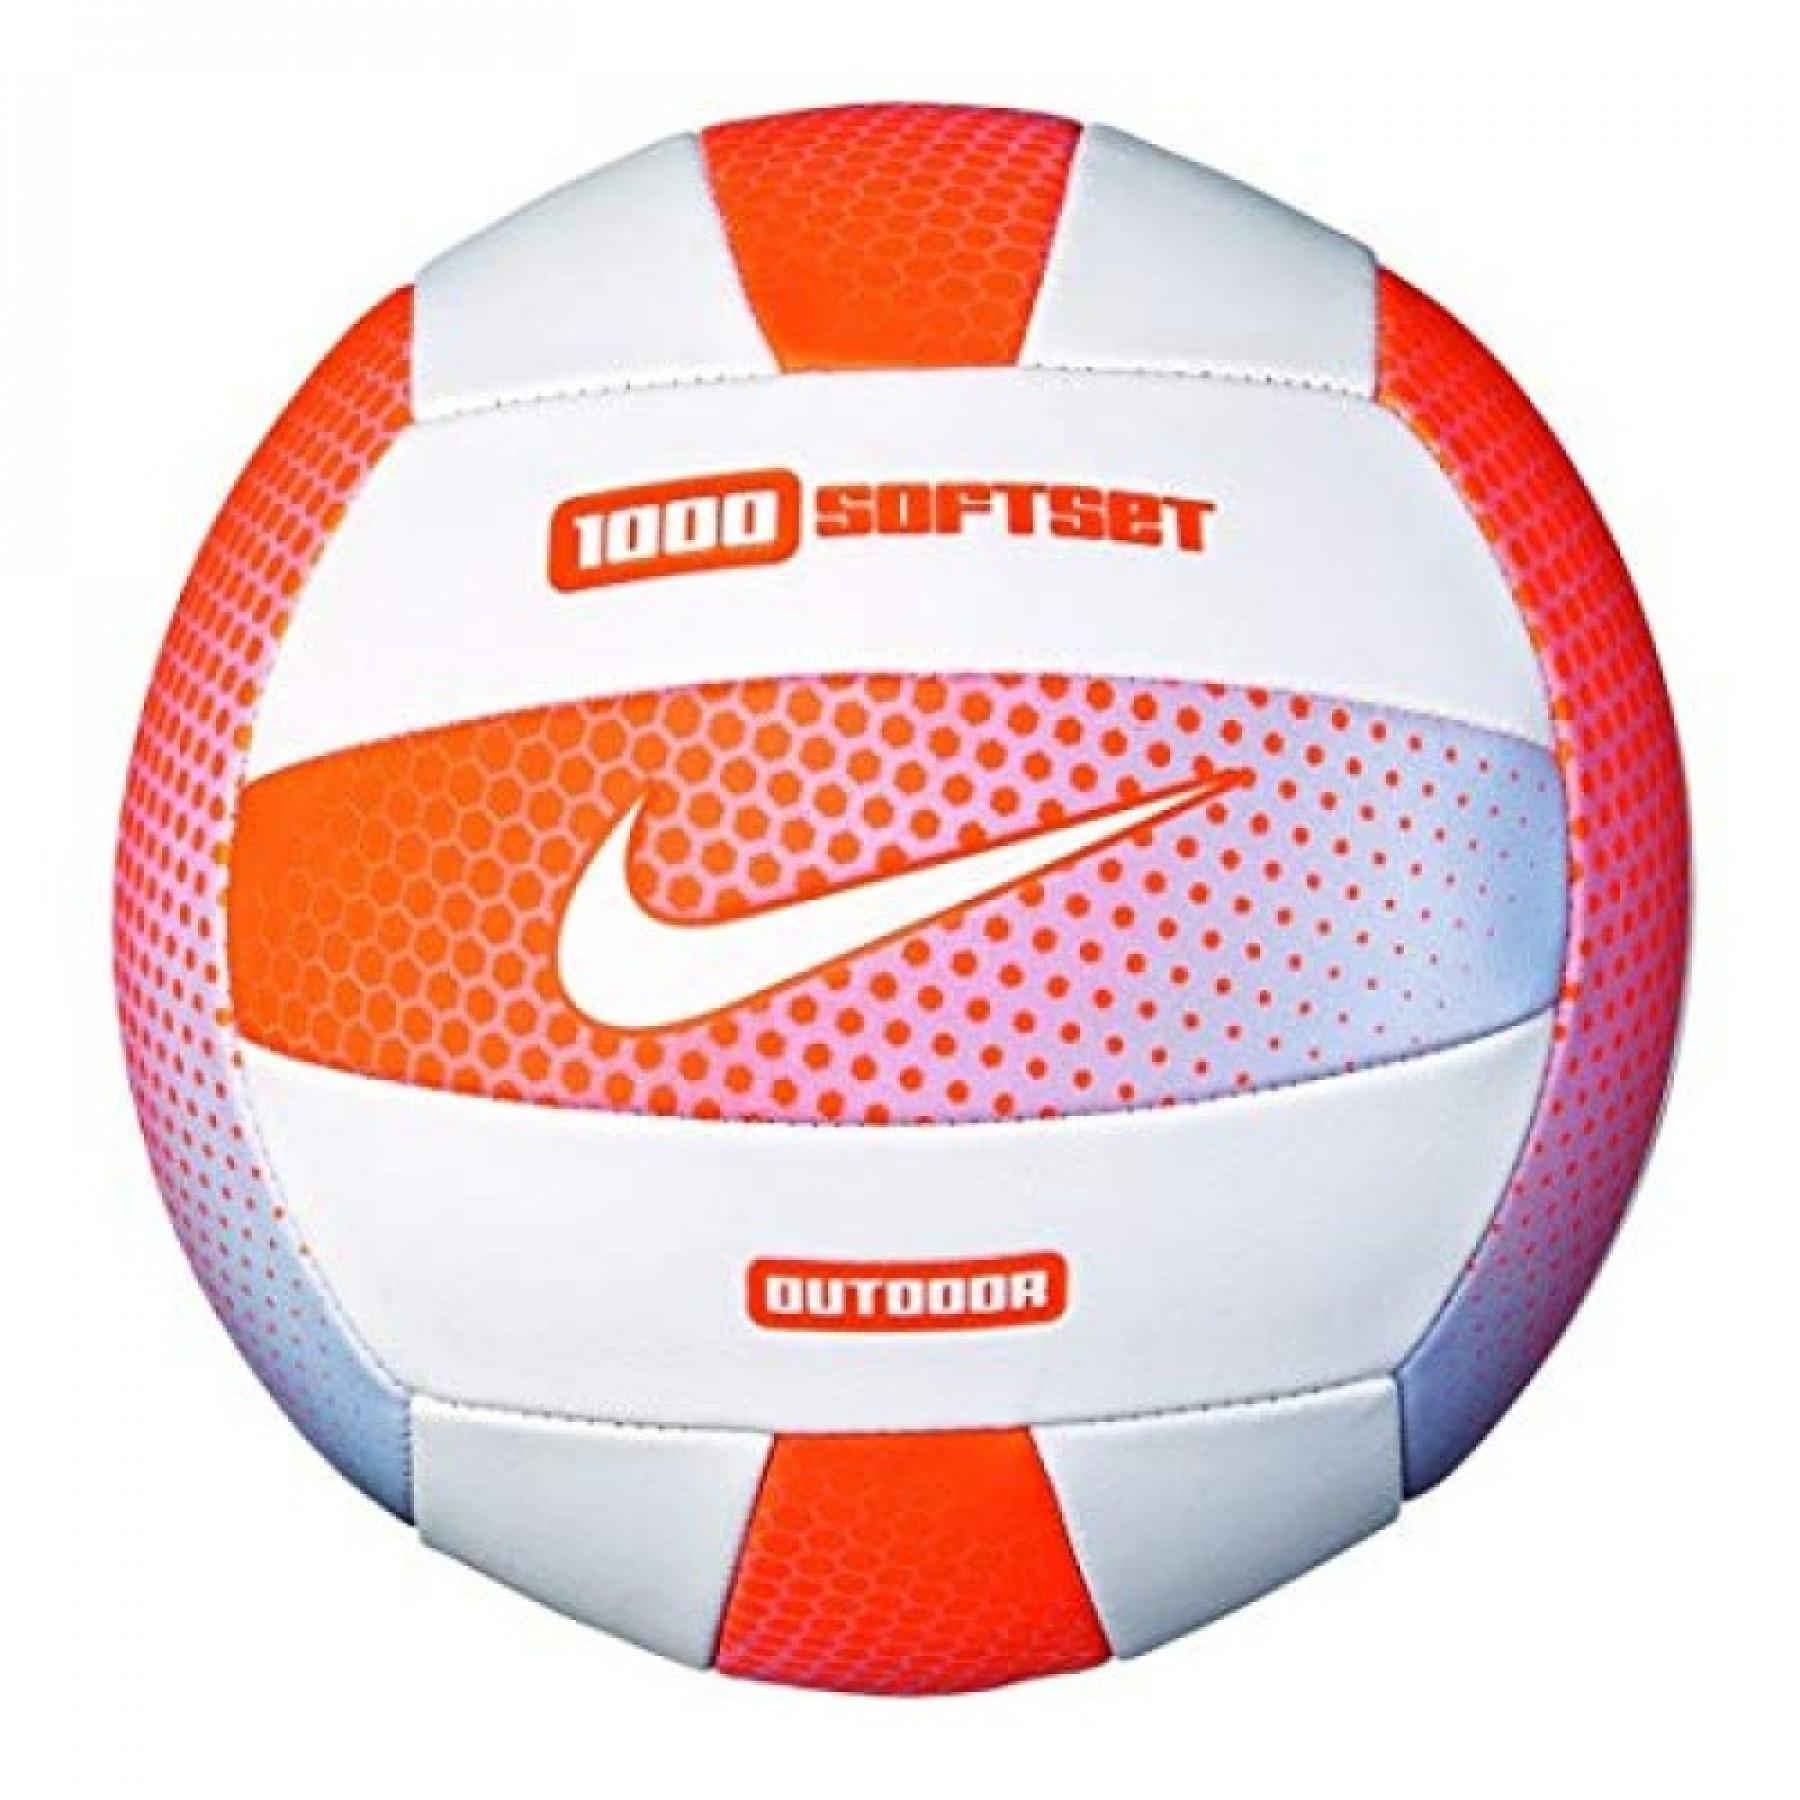 Set di 3 palloncini Nike 1000 softset outdoor 